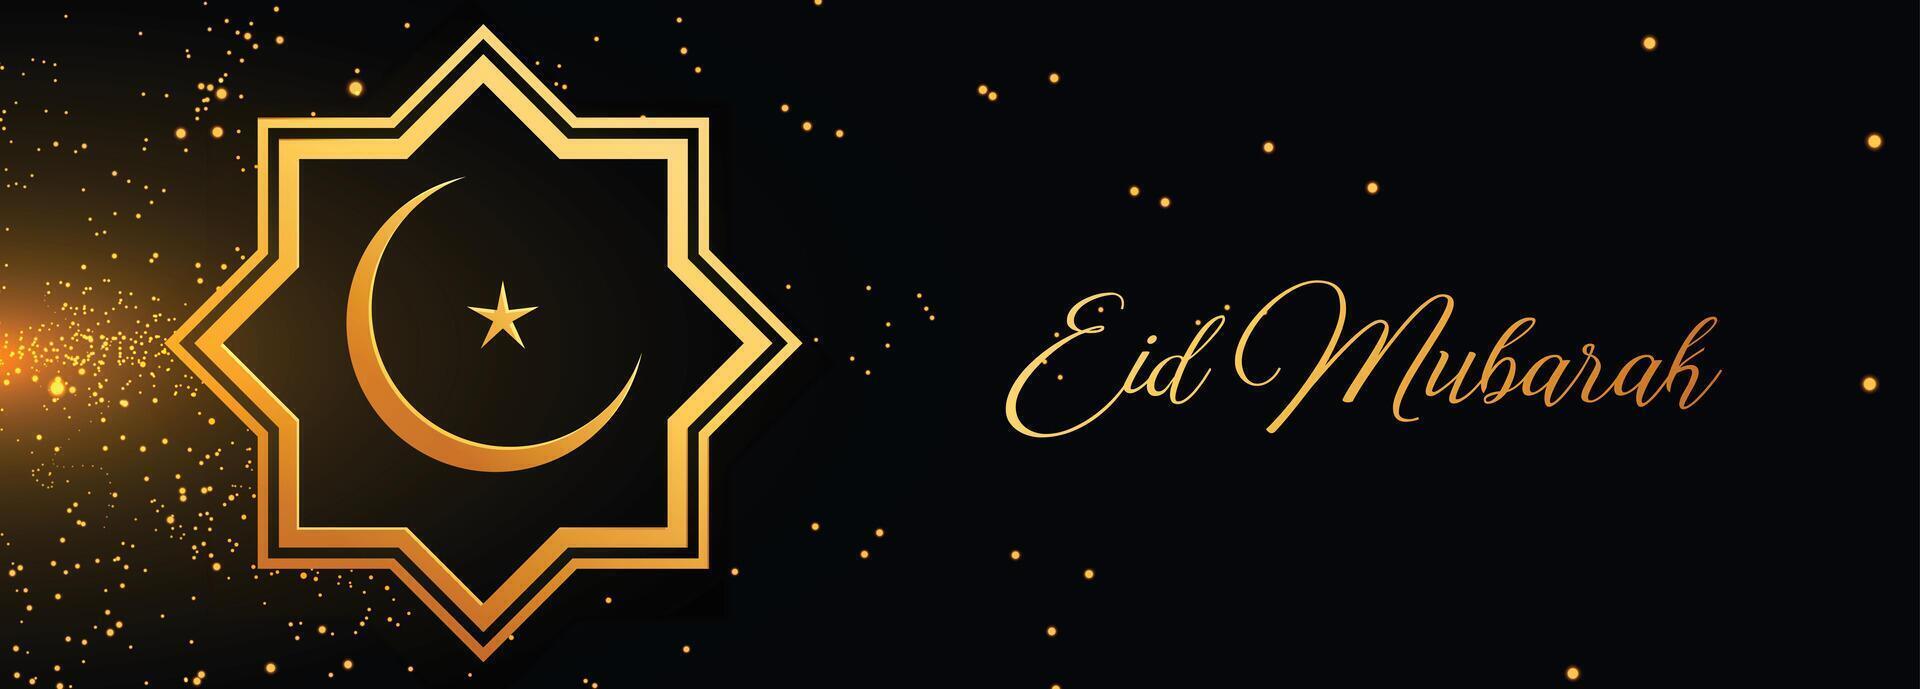 eid Mubarak golden islamisch funkeln Banner Design vektor